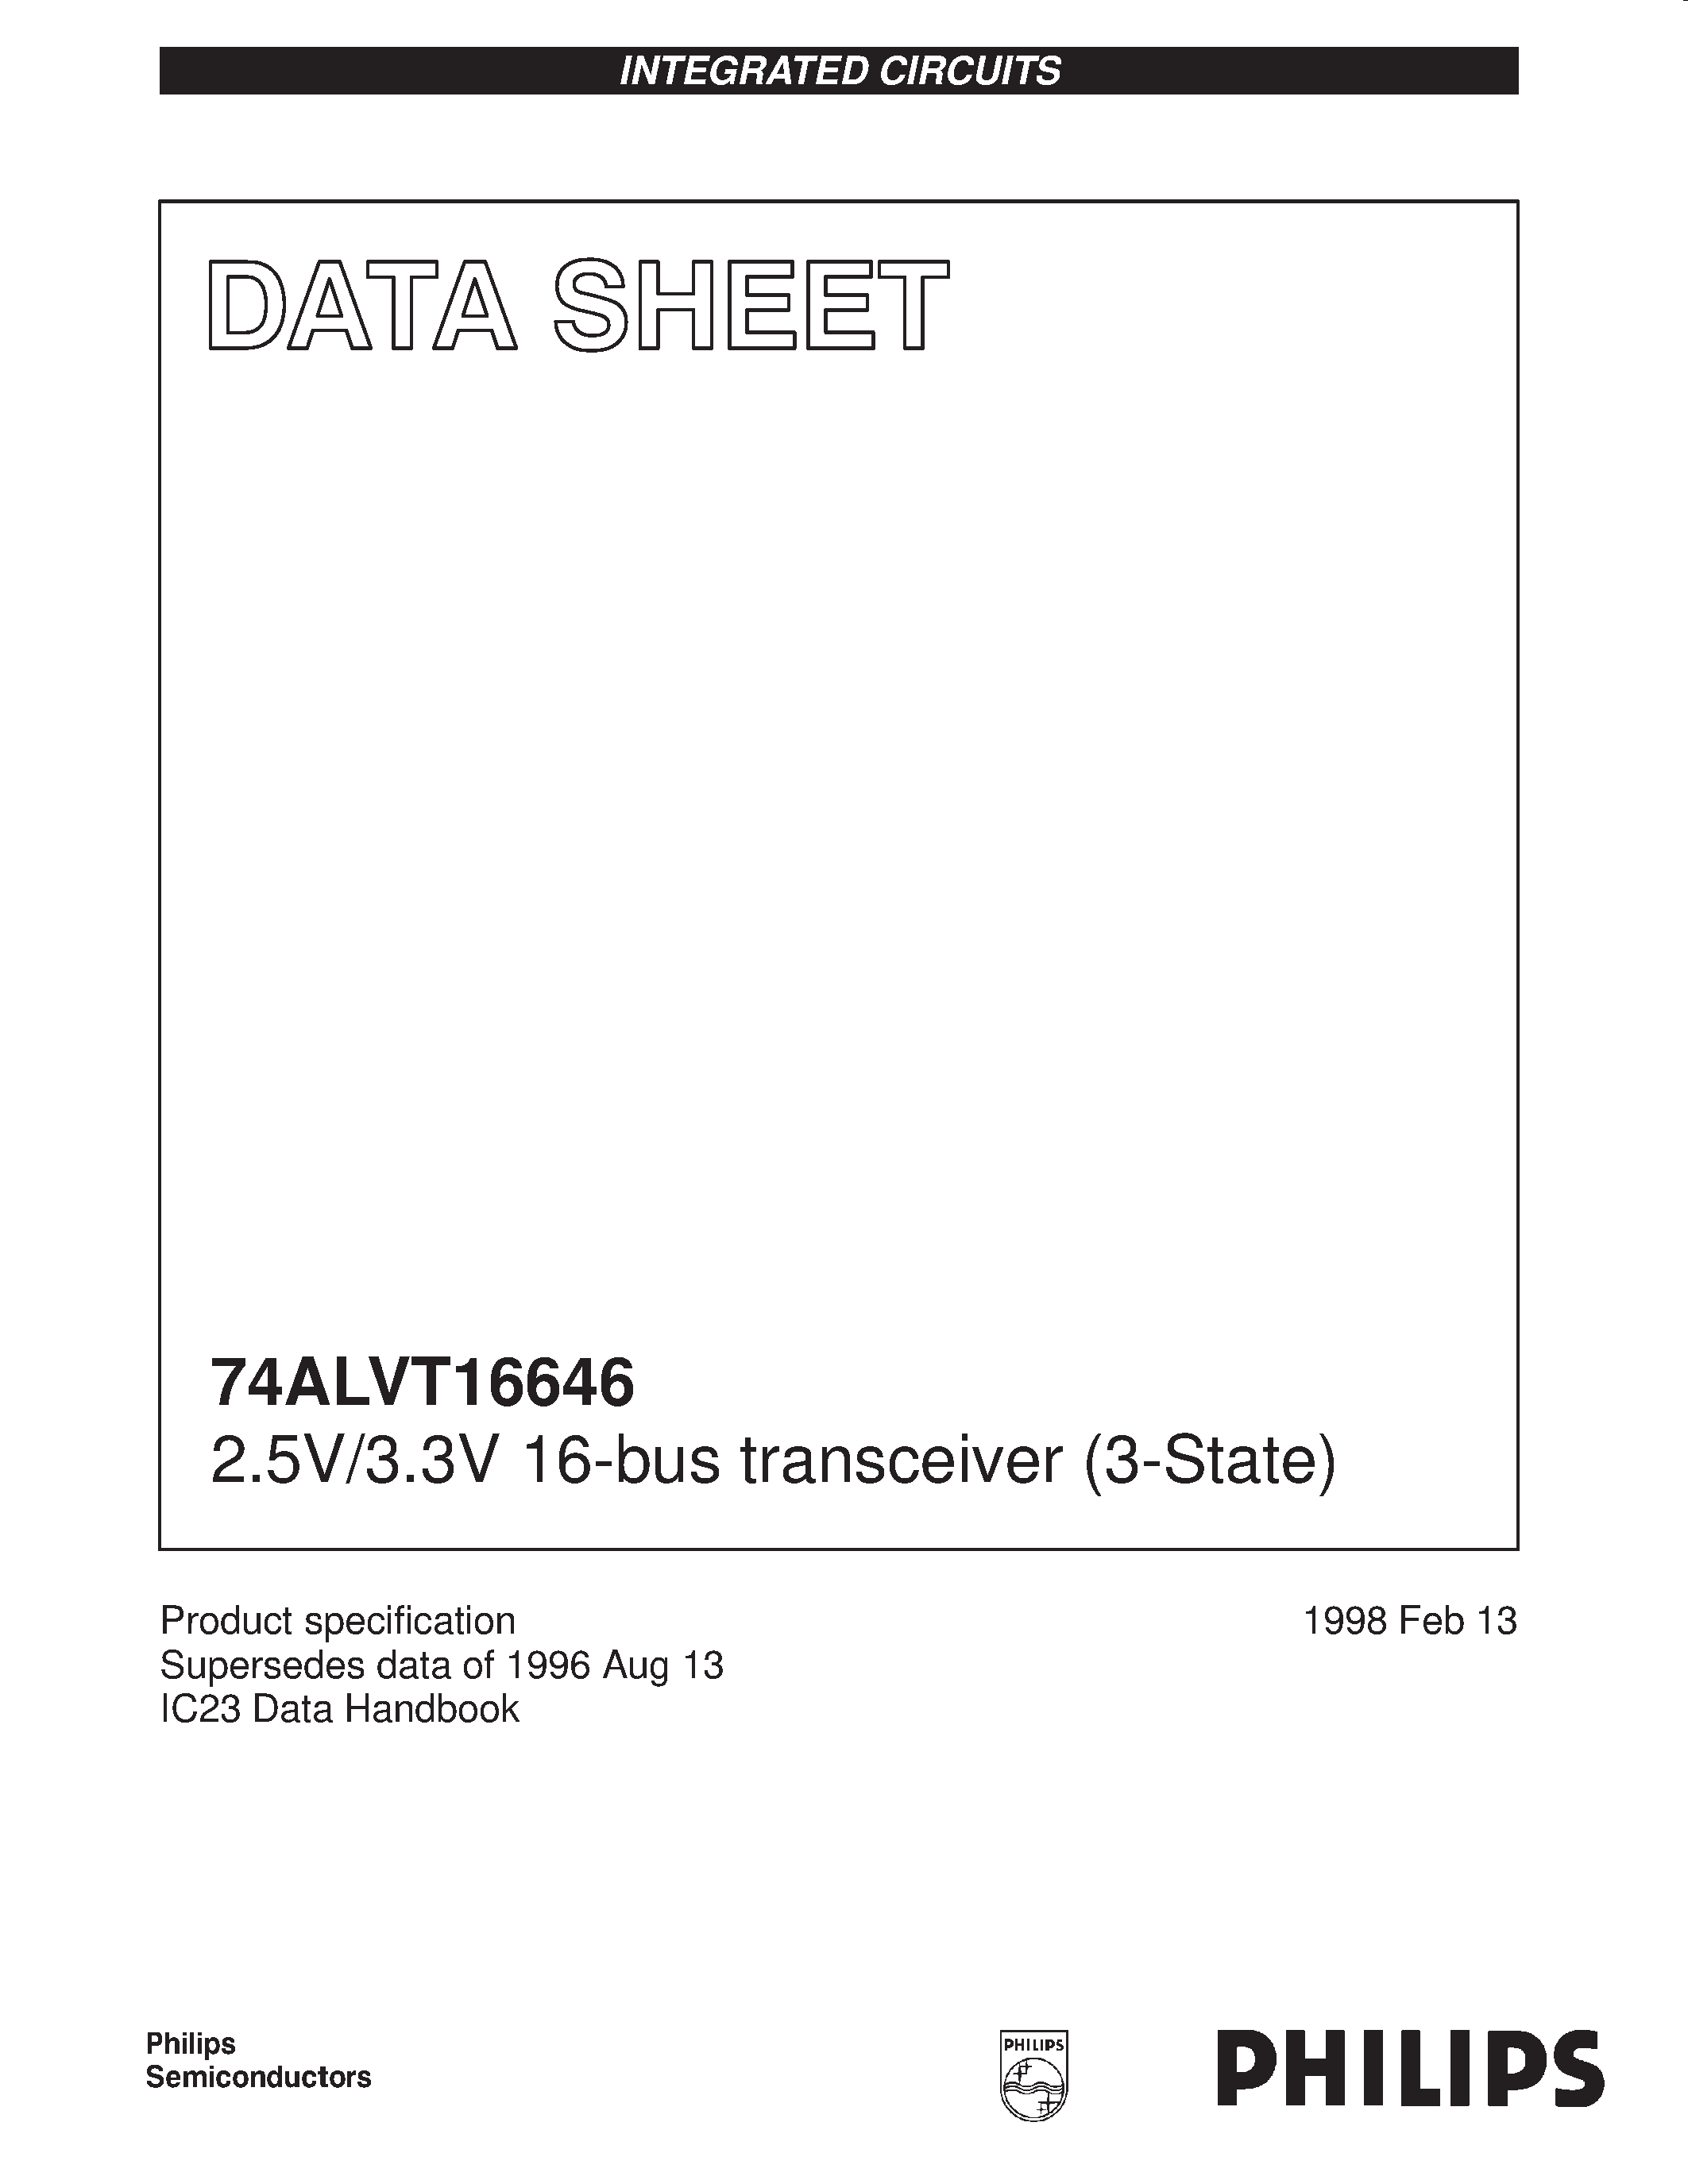 Datasheet 74ALVT16646DGG - 2.5V/3.3V 16-bus transceiver 3-State page 1